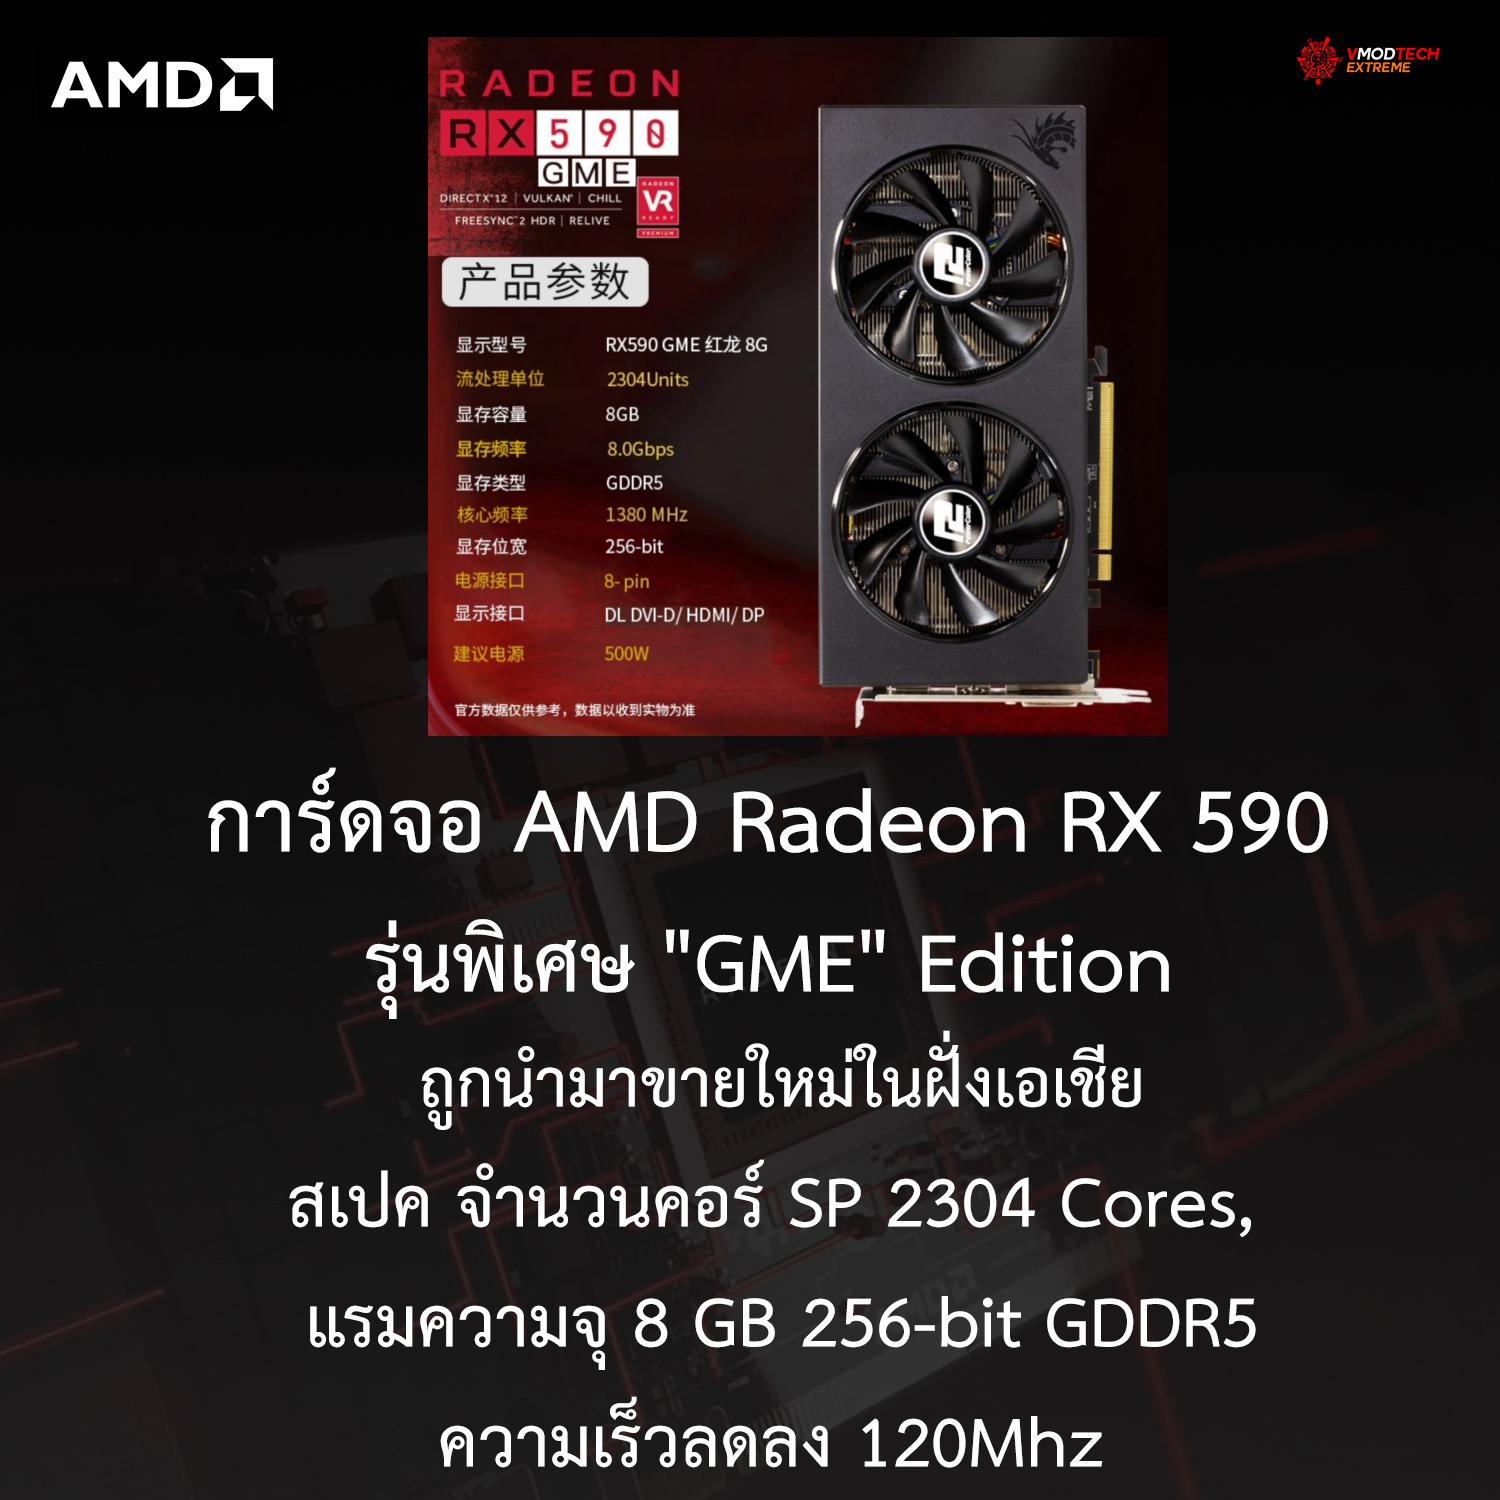 amd radeon rx 590 gme edition1 การ์ดจอ AMD Radeon RX 590 รุ่นพิเศษ GME Edition ถูกนำมาขายใหม่ในฝั่งเอเชีย 